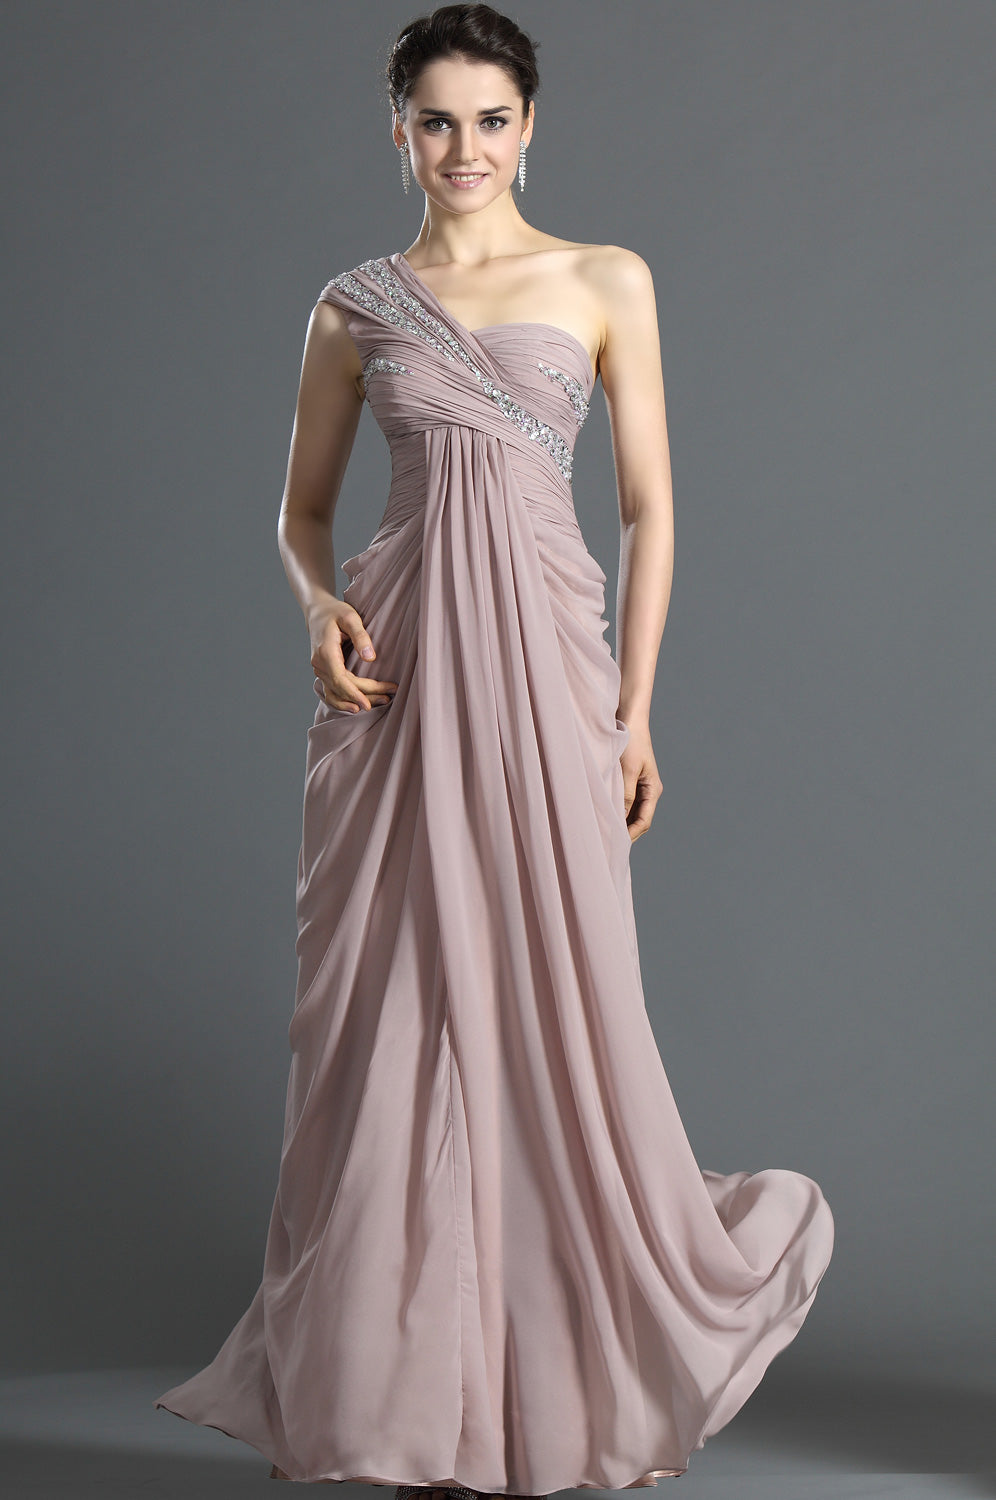 Nude Pink Chiffon Sheath/Column One Shoulder With Beading Bridesmaid Dress(UKBD03-496)